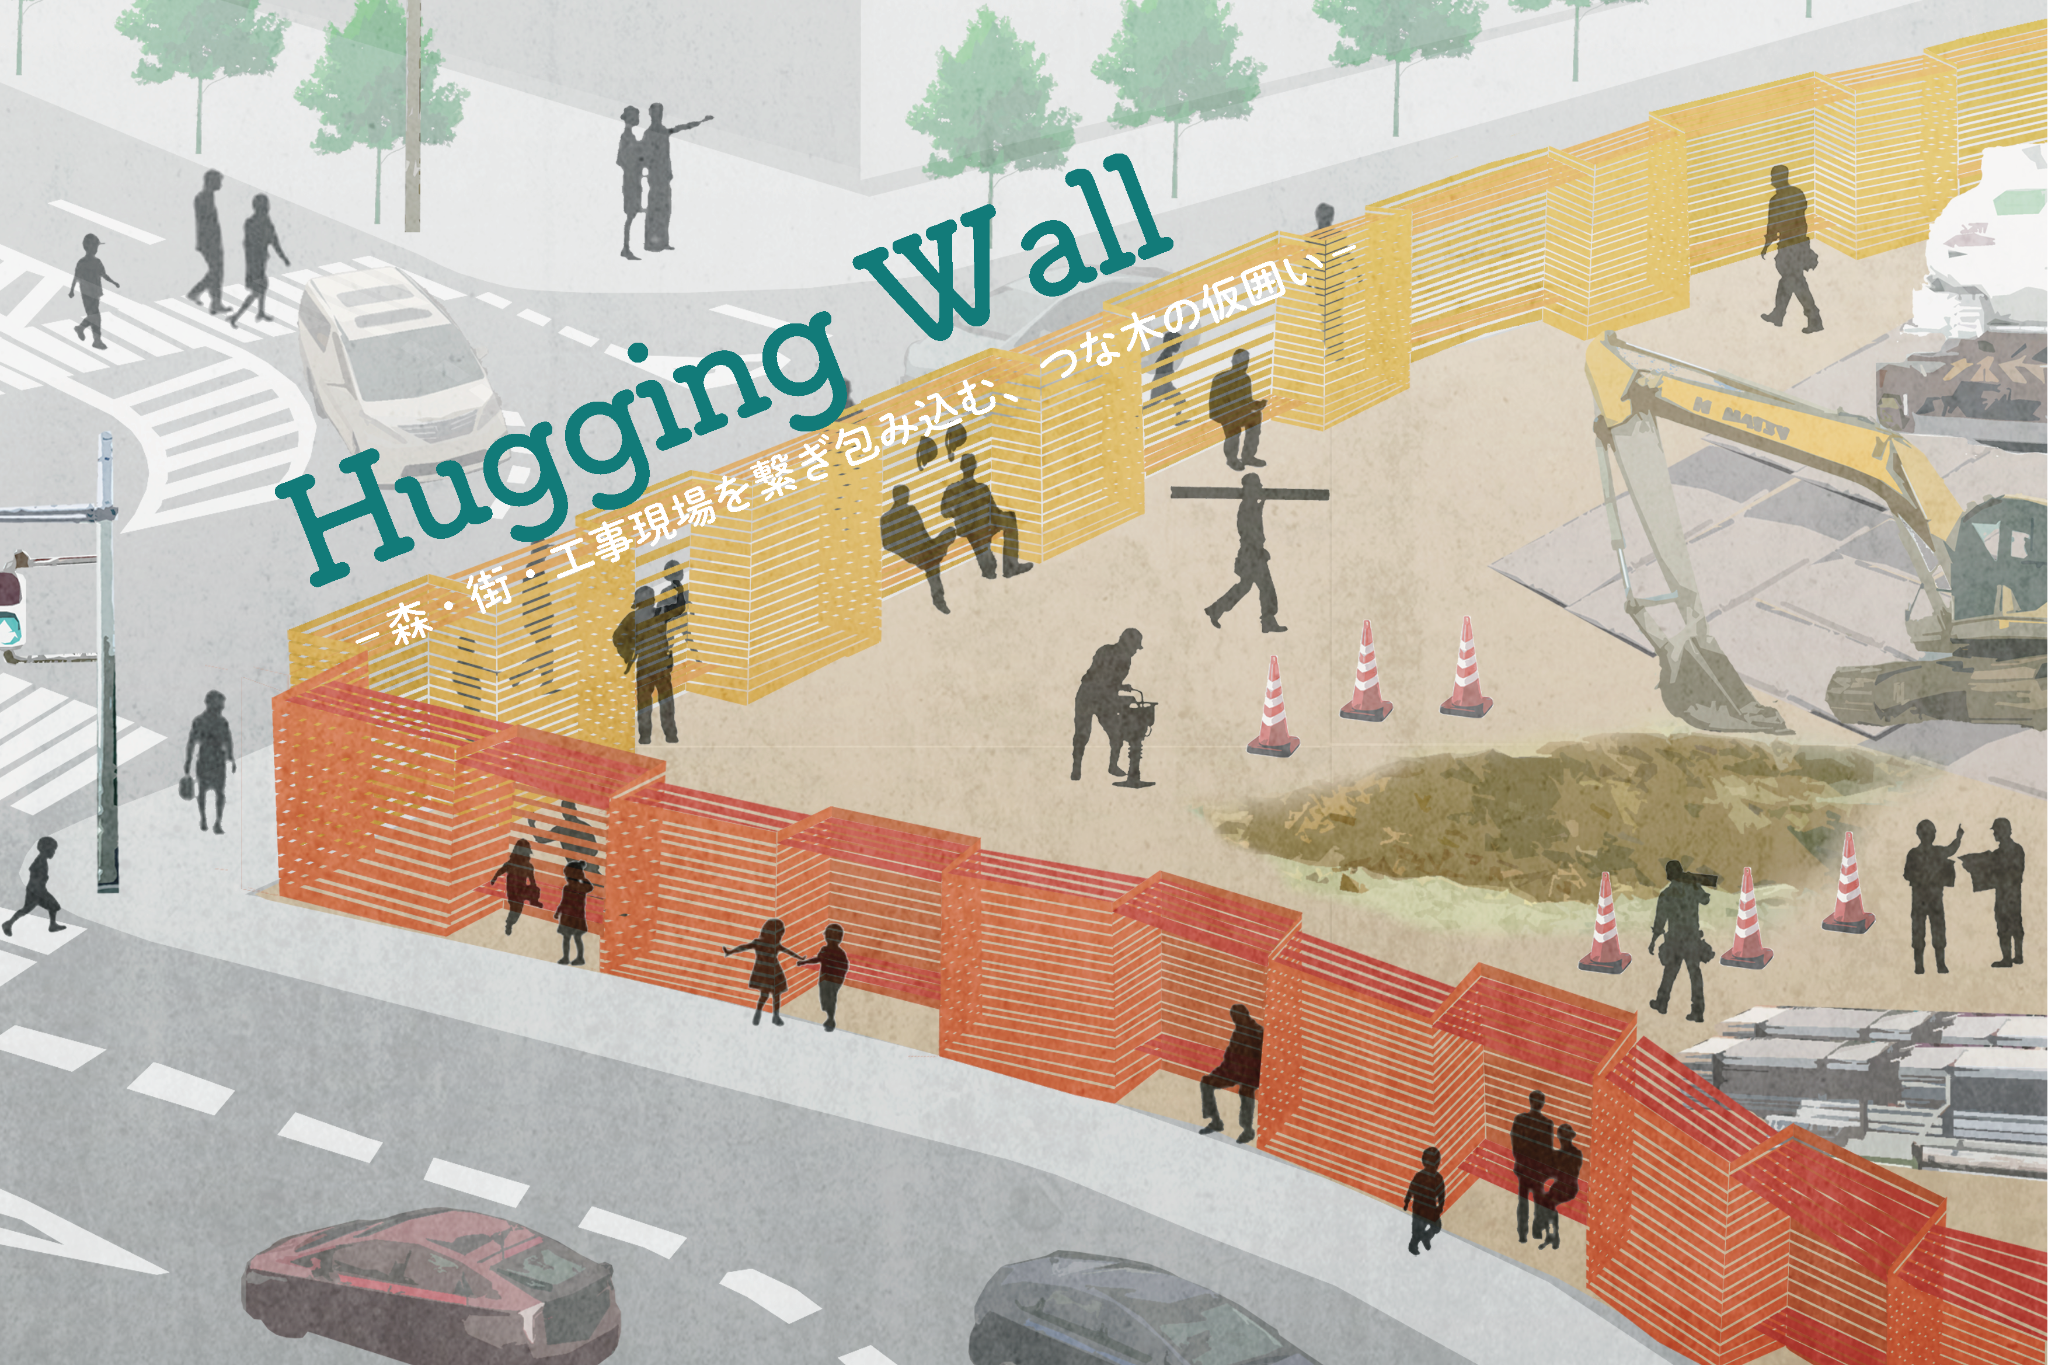 Hugging Wall−森・街・工事現場を繋ぎ包み込む、つな木の仮囲い−